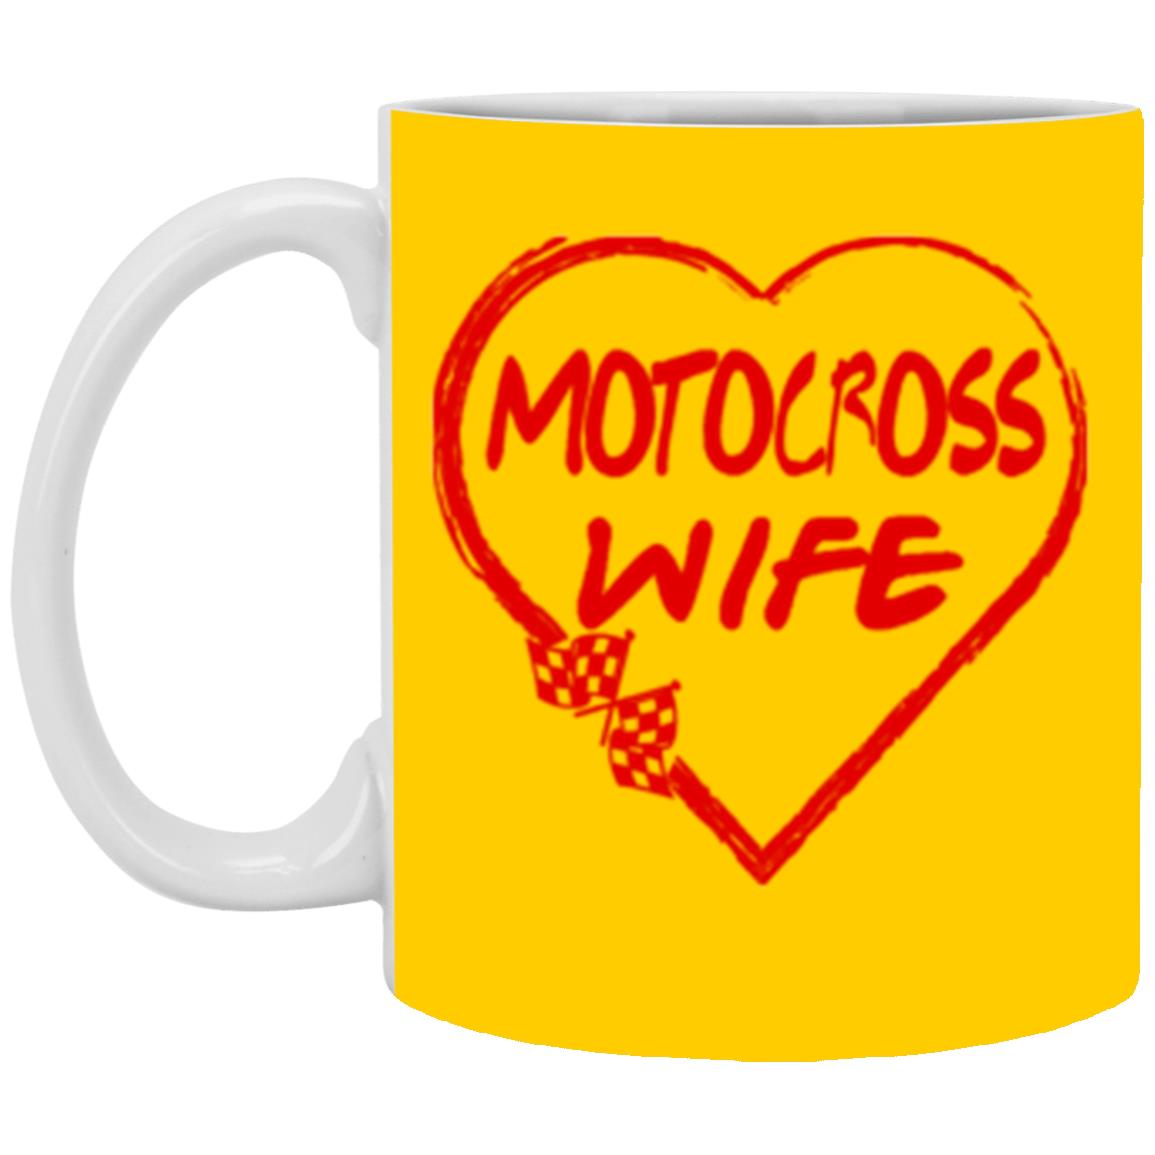 Motocross Wife 11 oz. White Mug